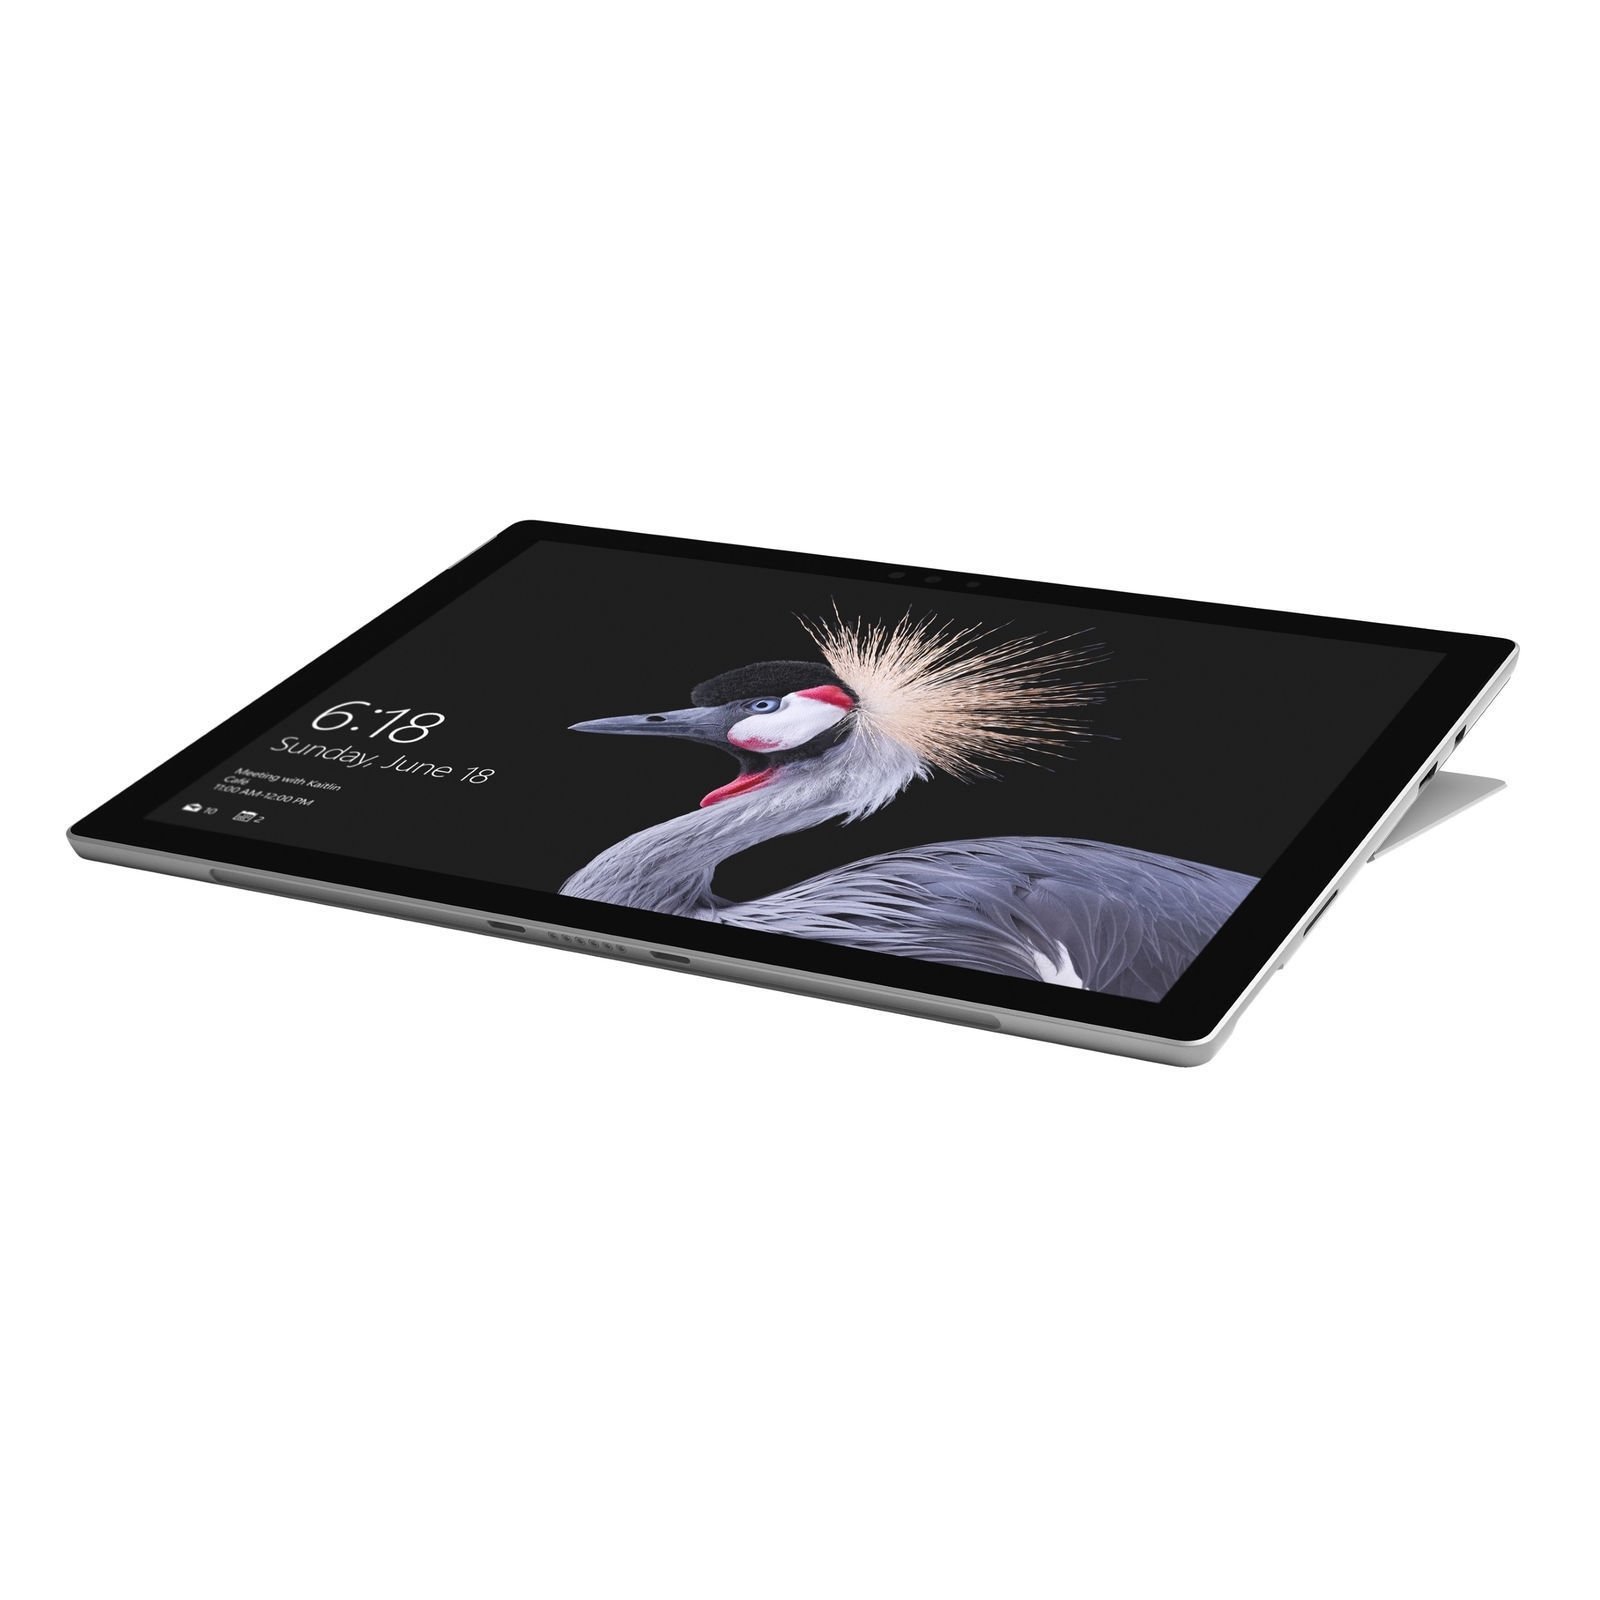 Microsoft Surface Pro 2017 Intel Core m3-7Y30 X2 1.0GHz 128GB 12.3in, Silver (Renewed)